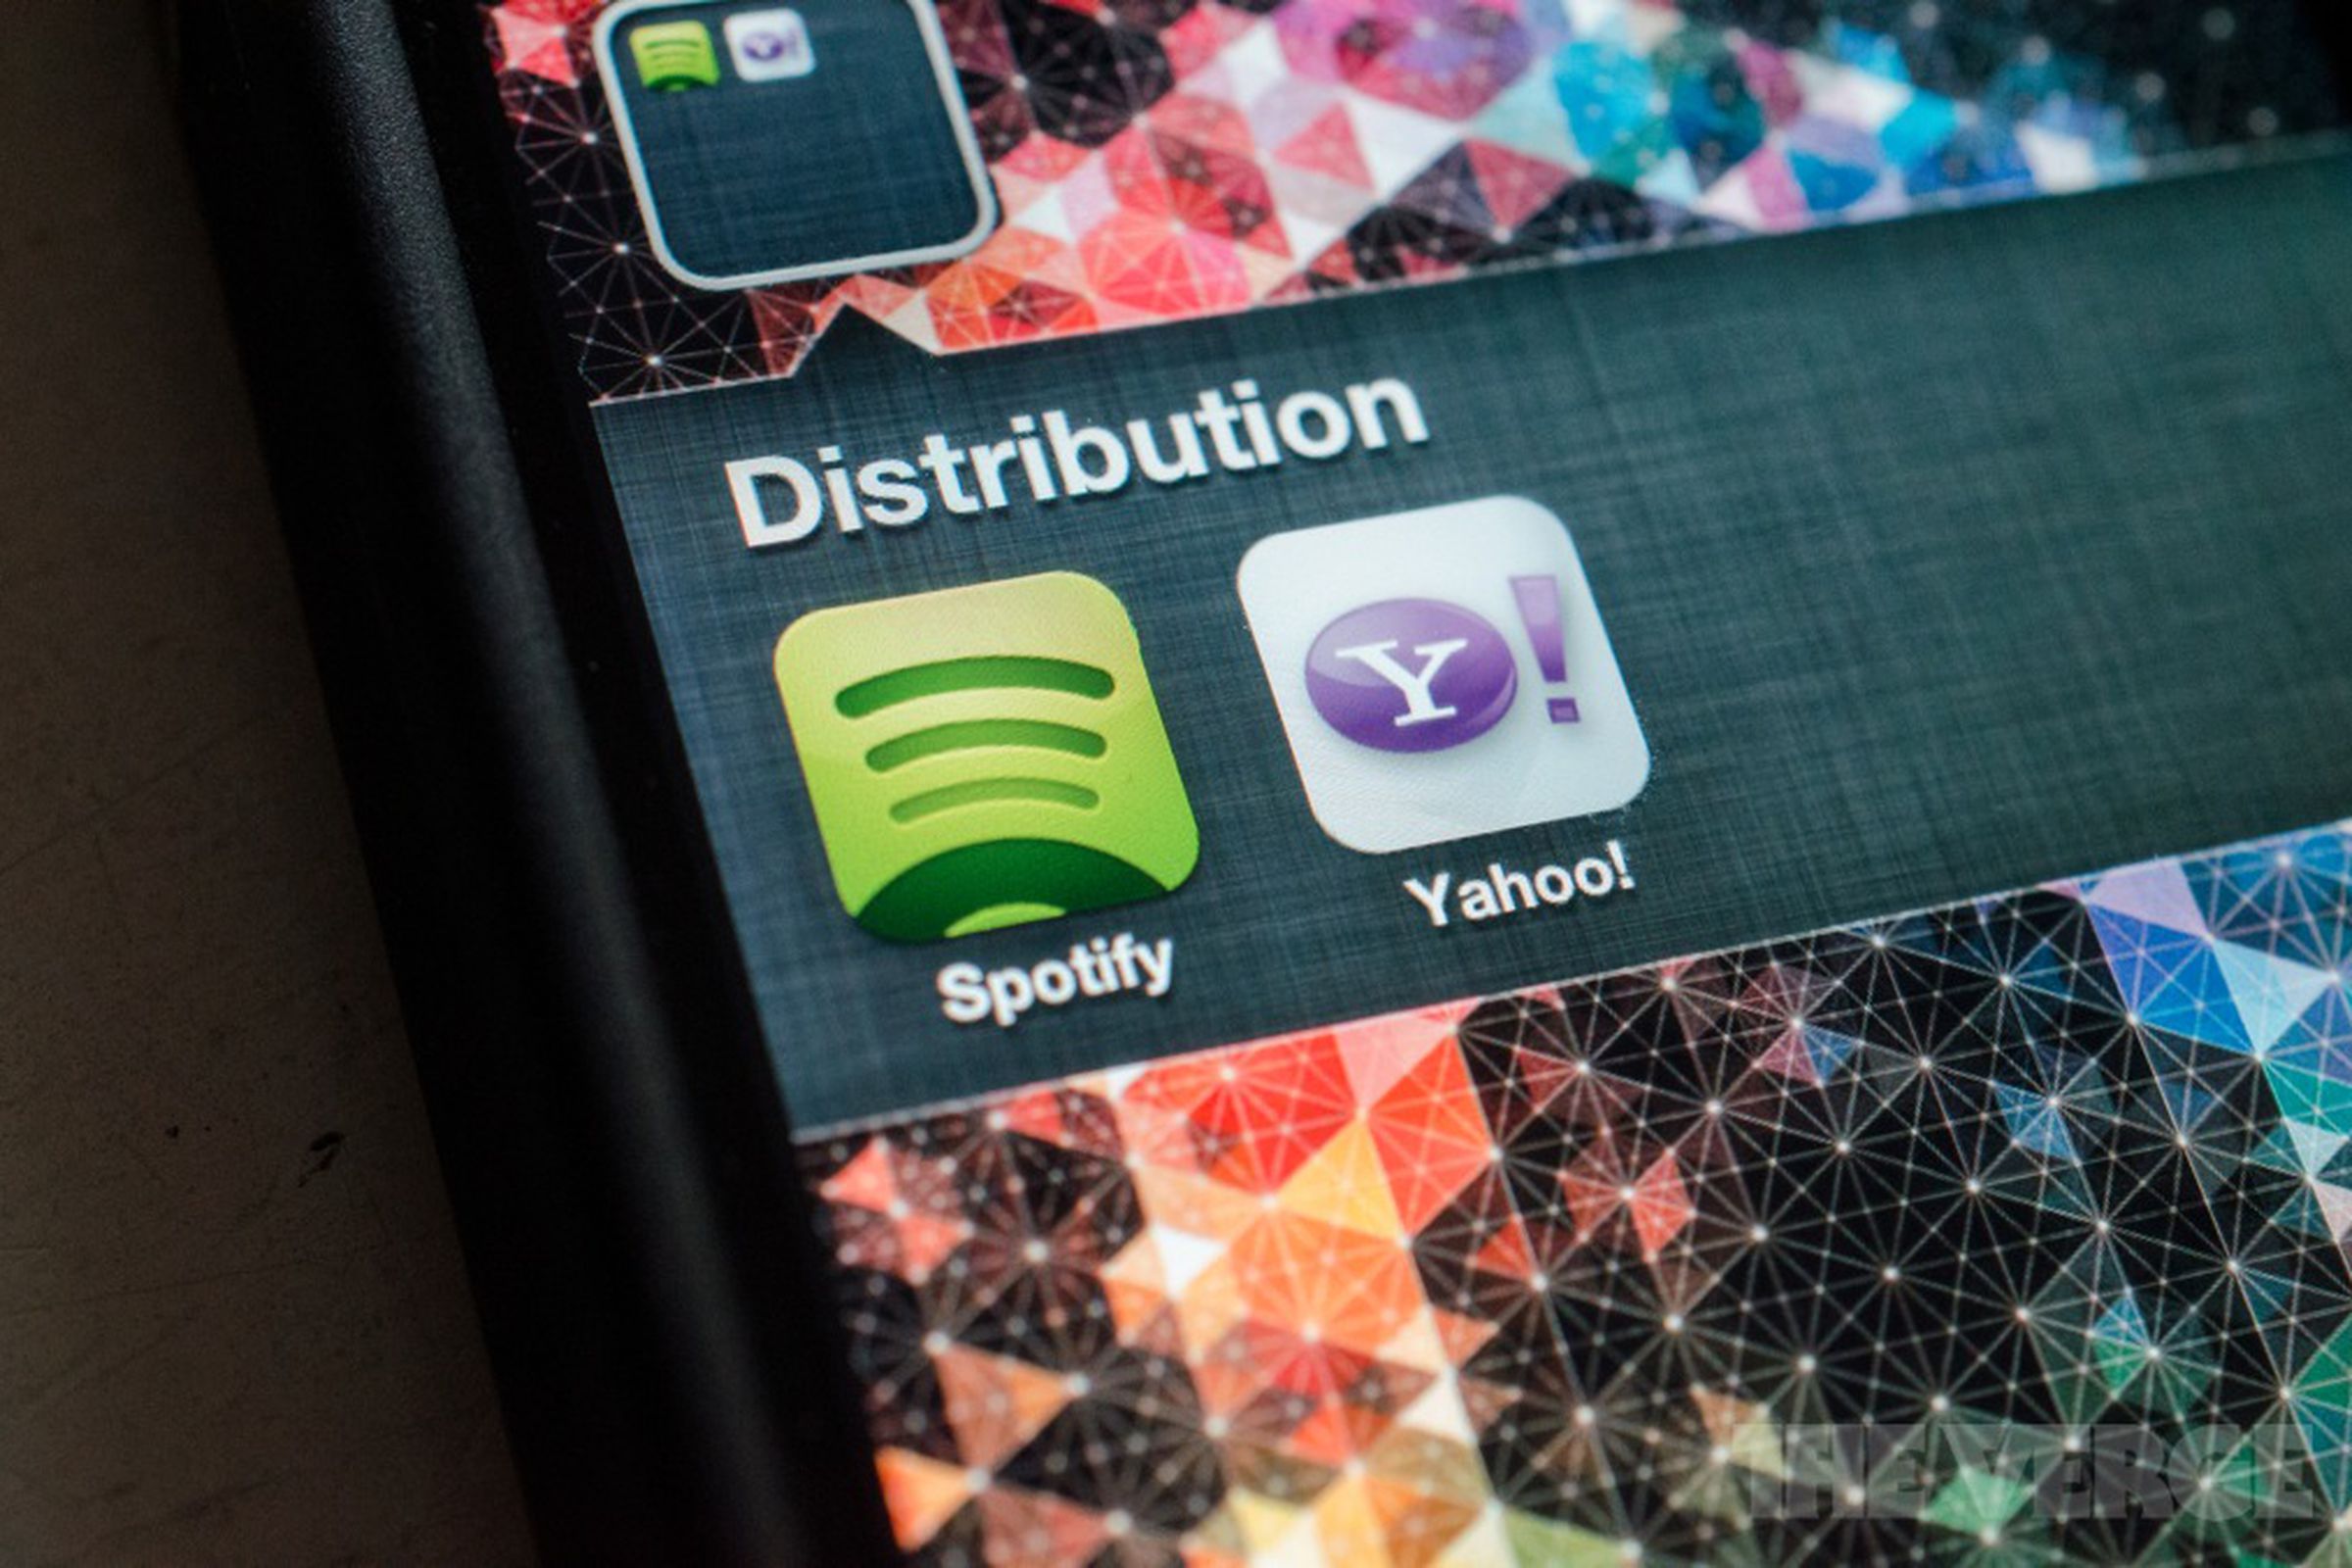 Spotify Yahoo distribution